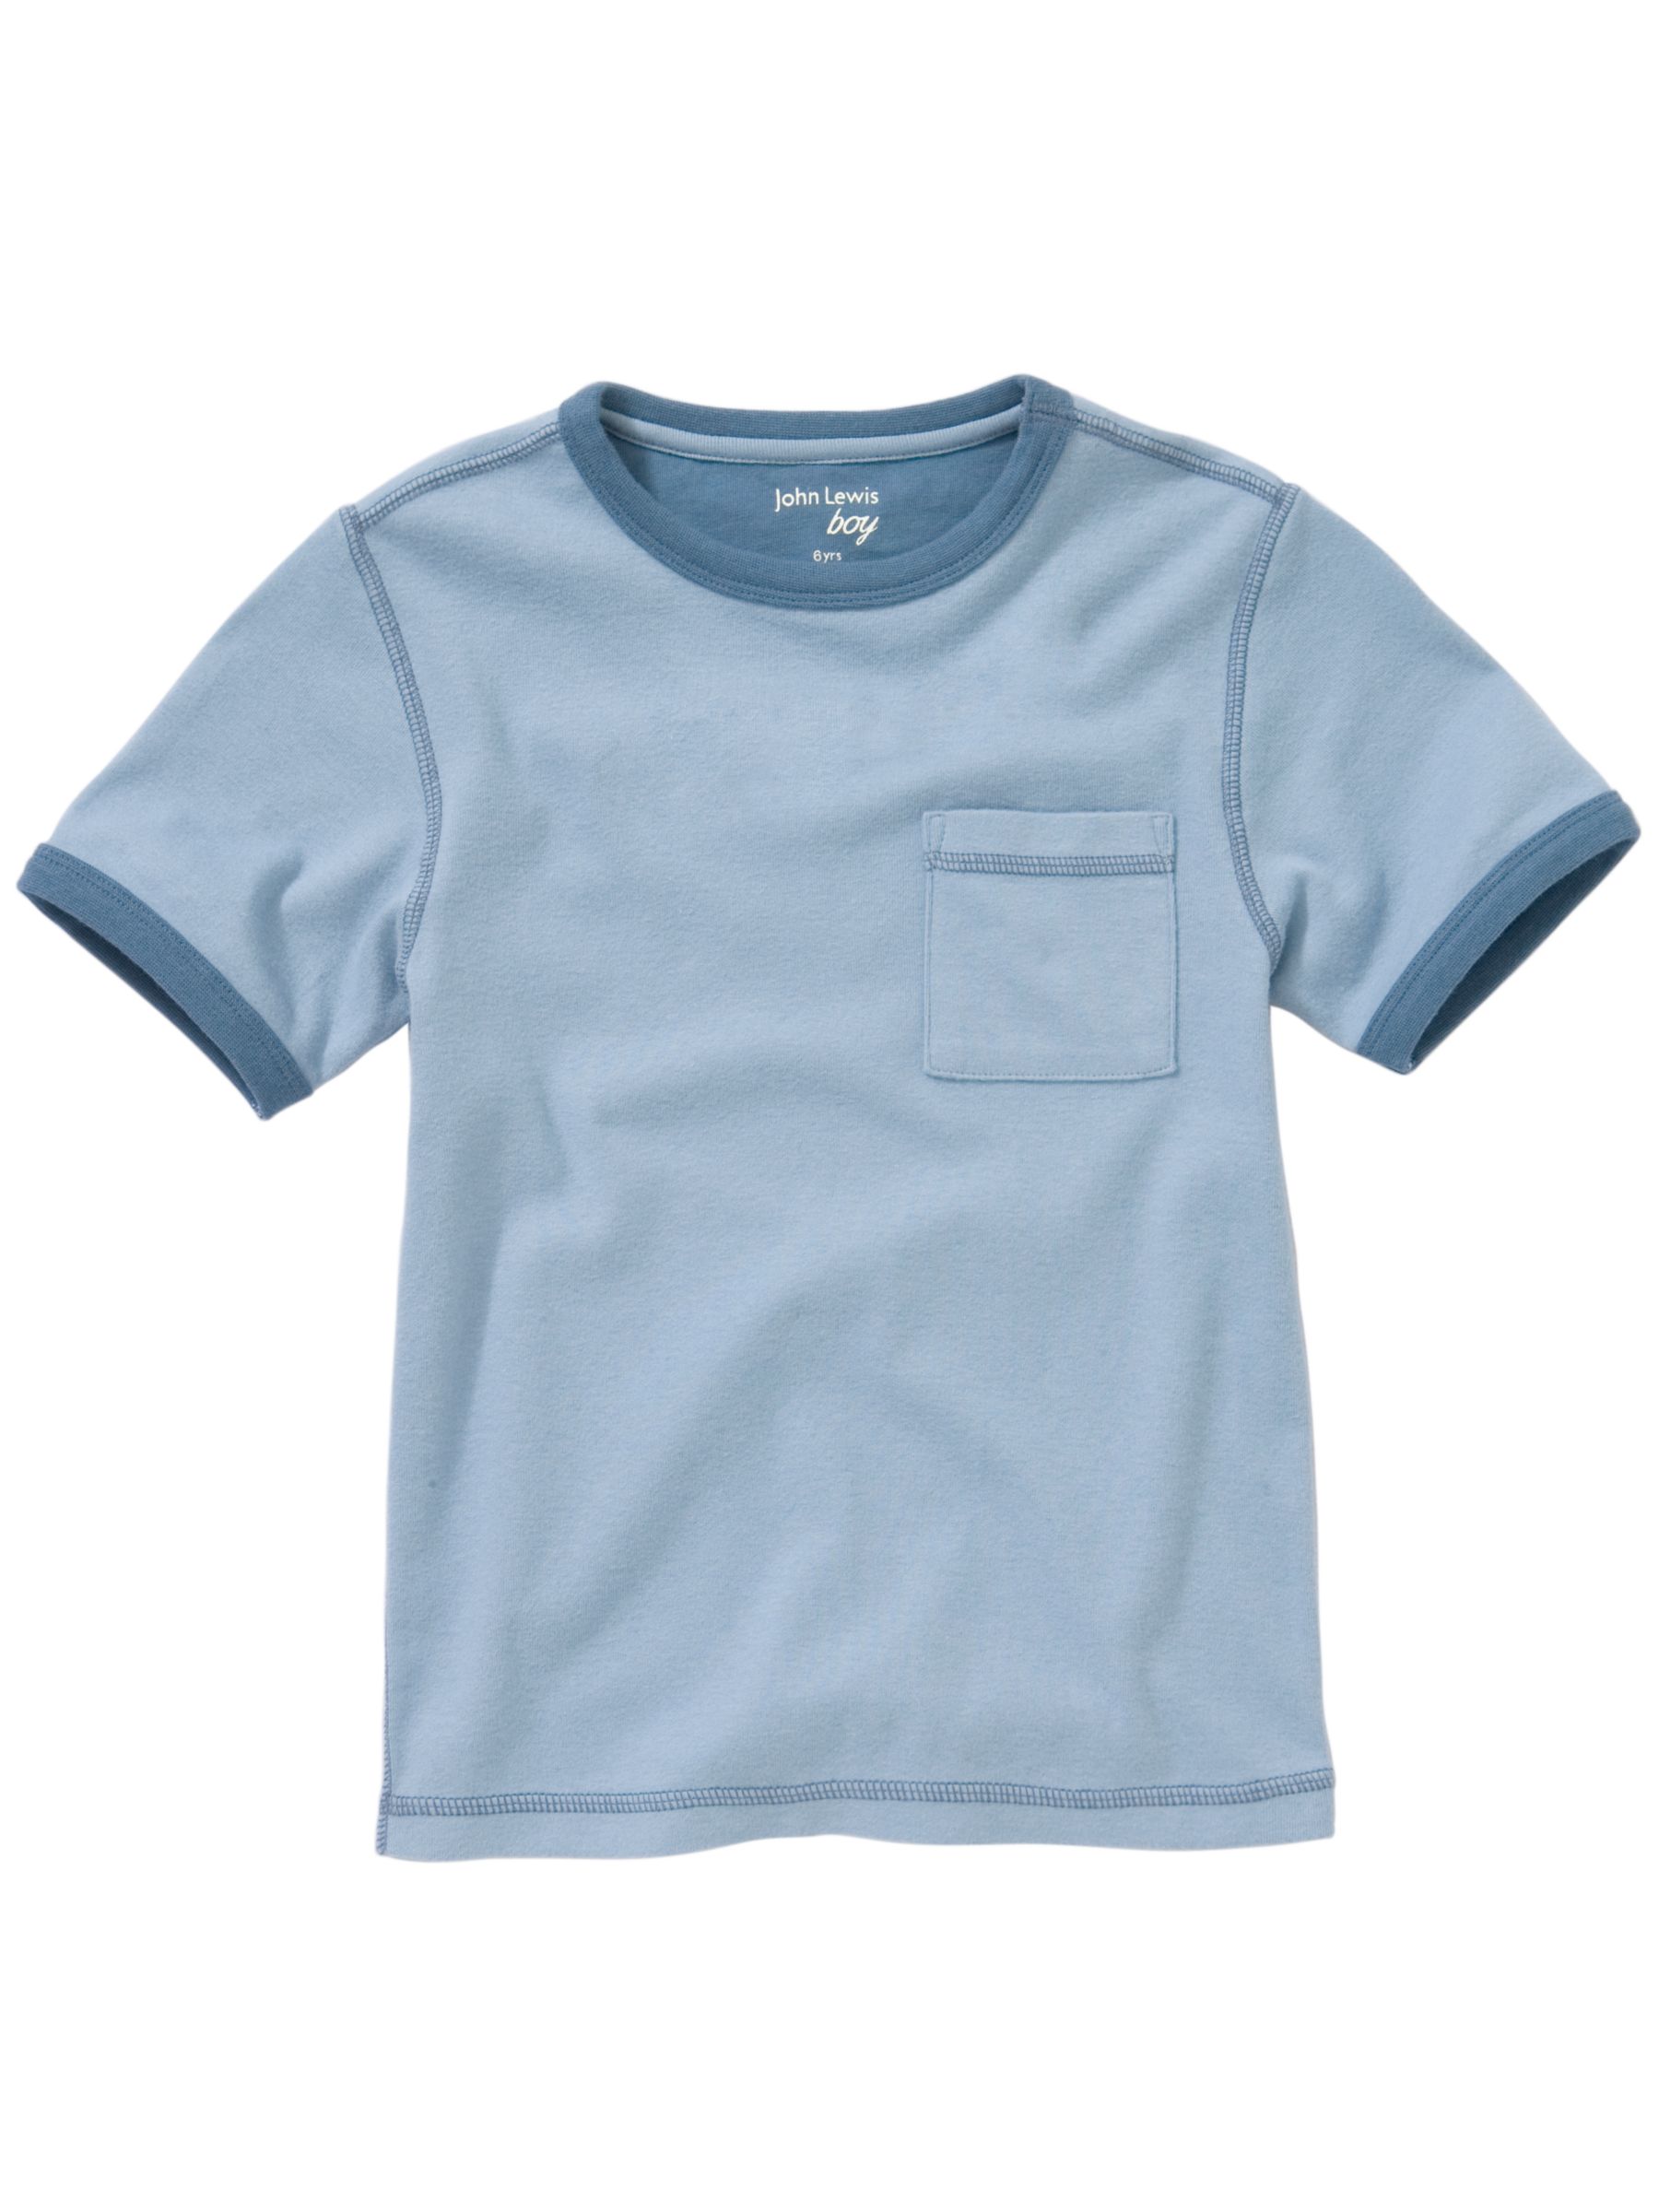 John Lewis Boy Short Sleeve T-Shirt, Blue, 11